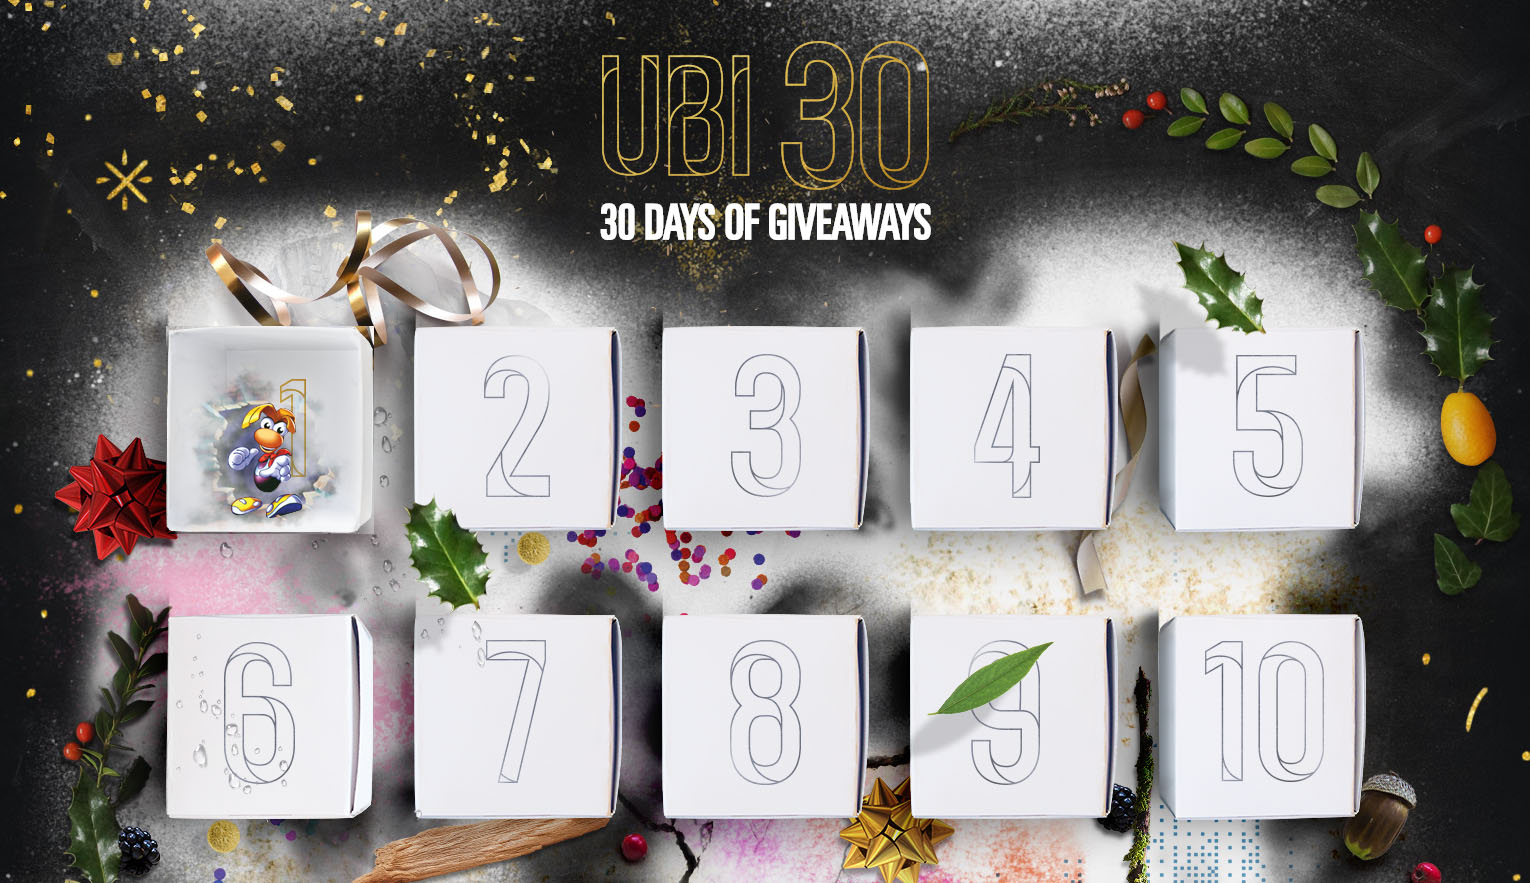 Full List of UBI 30 Days of Giveaways Revealed